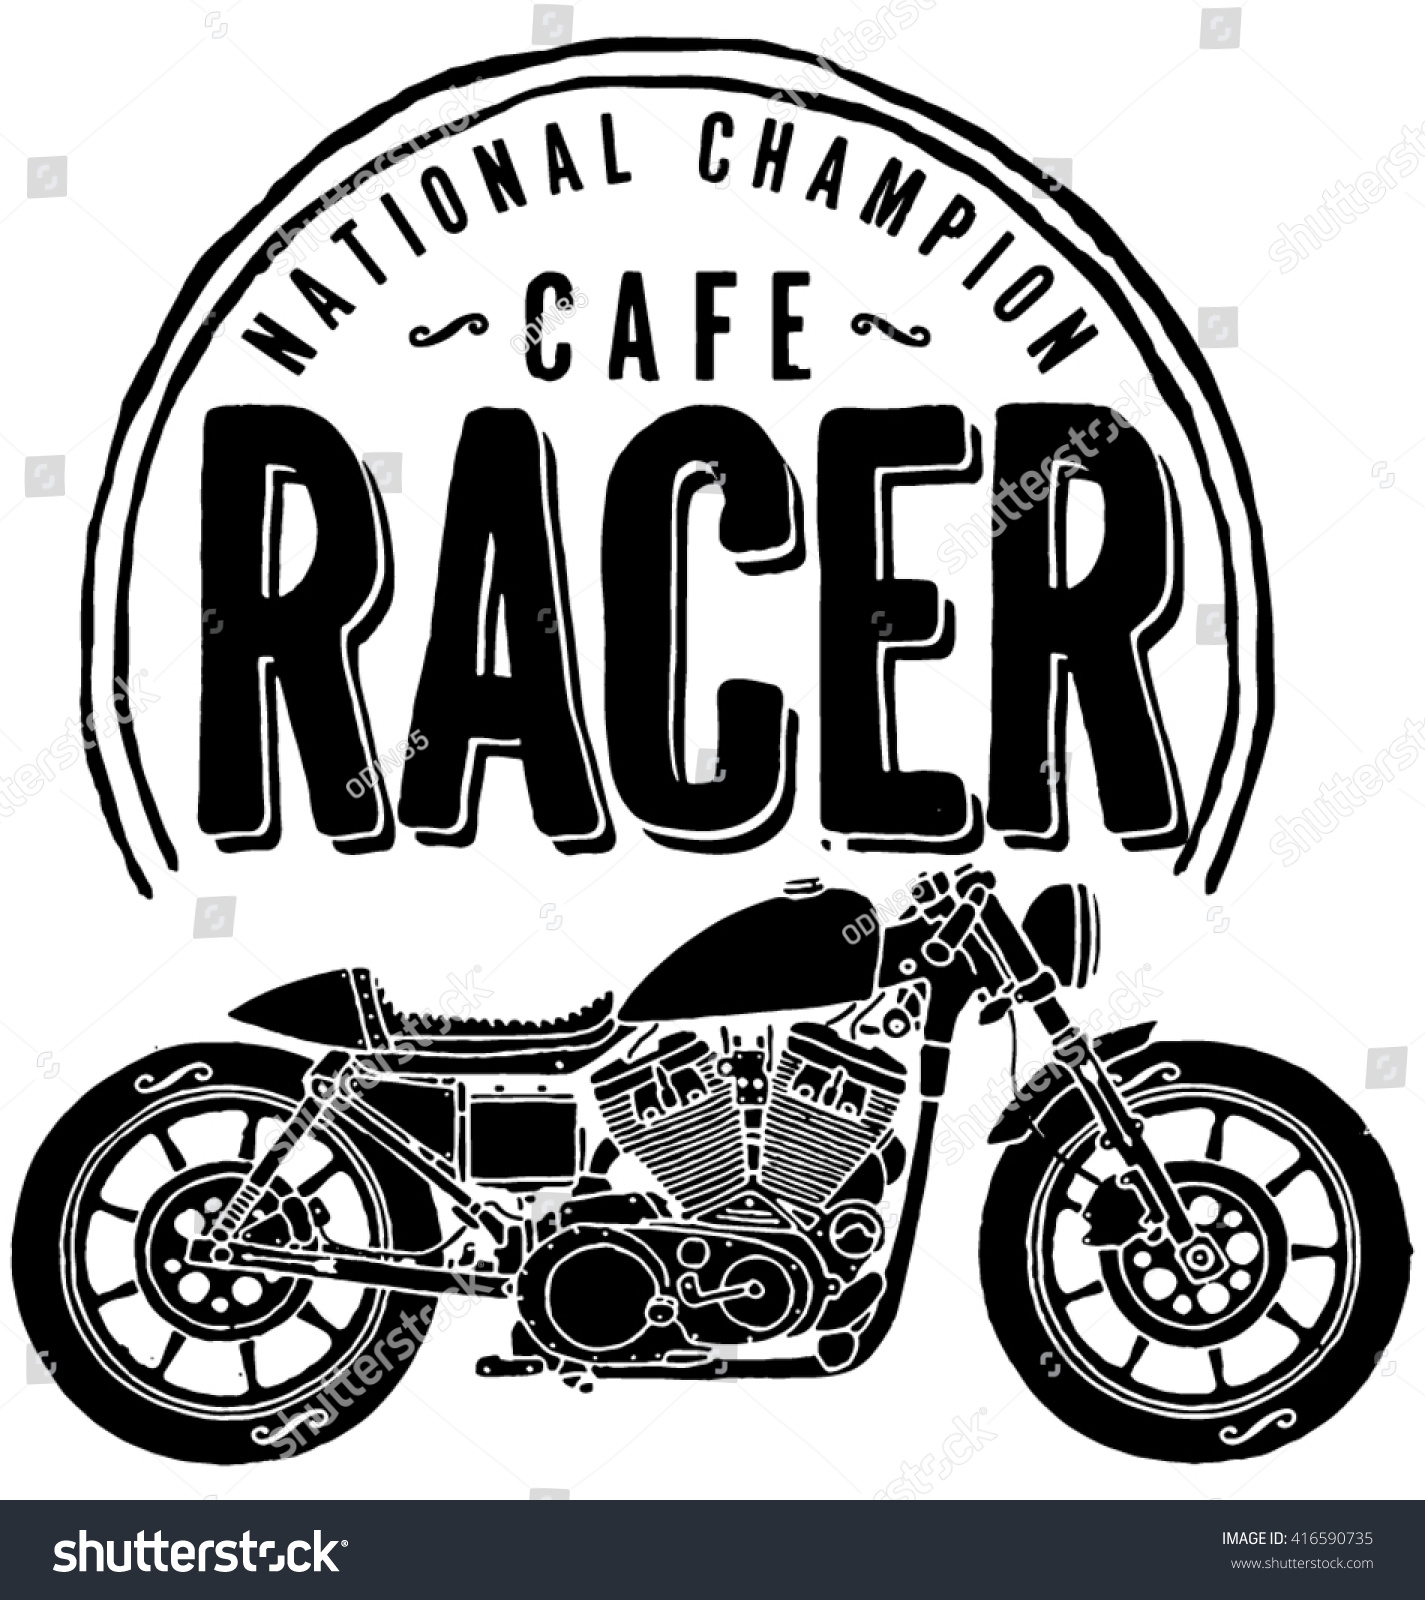 cafe racer clip art - photo #16